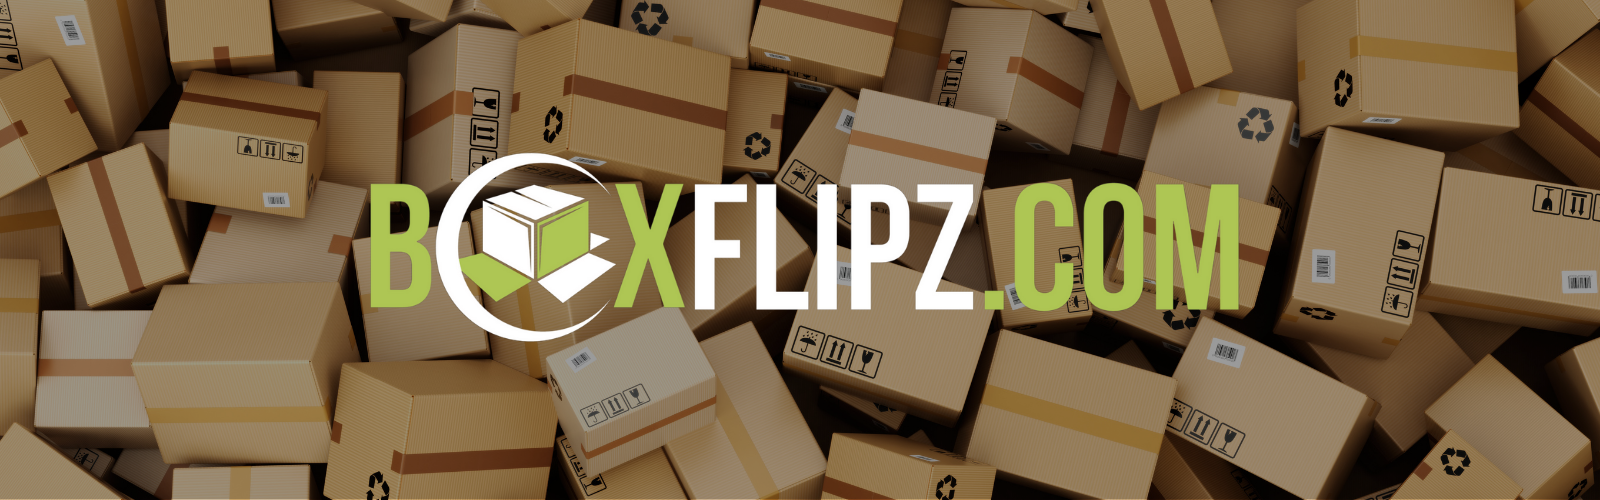 Scratch and Dent Appliances |Box Flipz